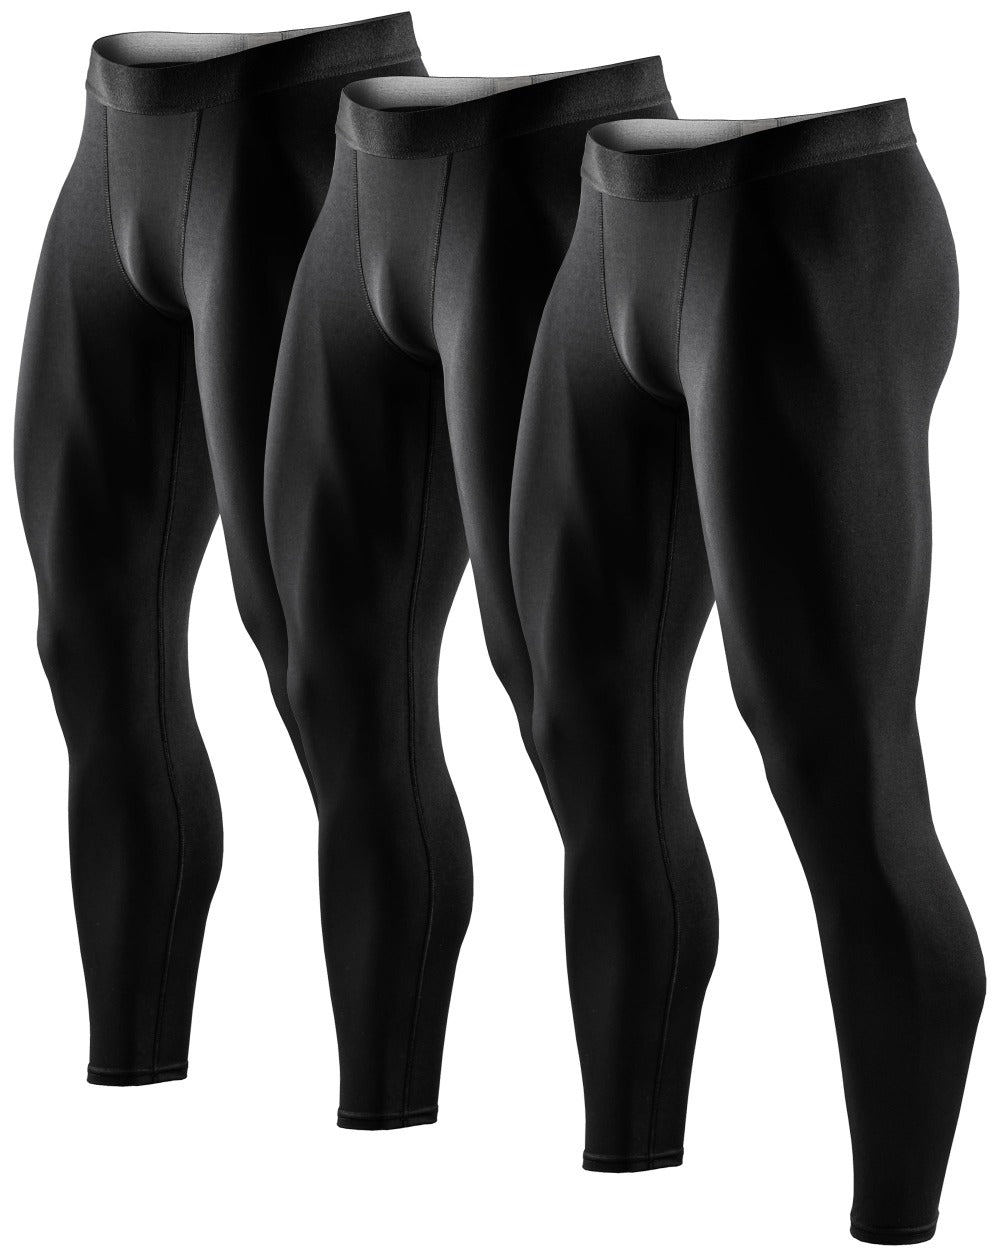 SS COLOR FISH 3 Pack Men Compression Pants Athletic Baselayer Workout  Legging Running Tights for Men